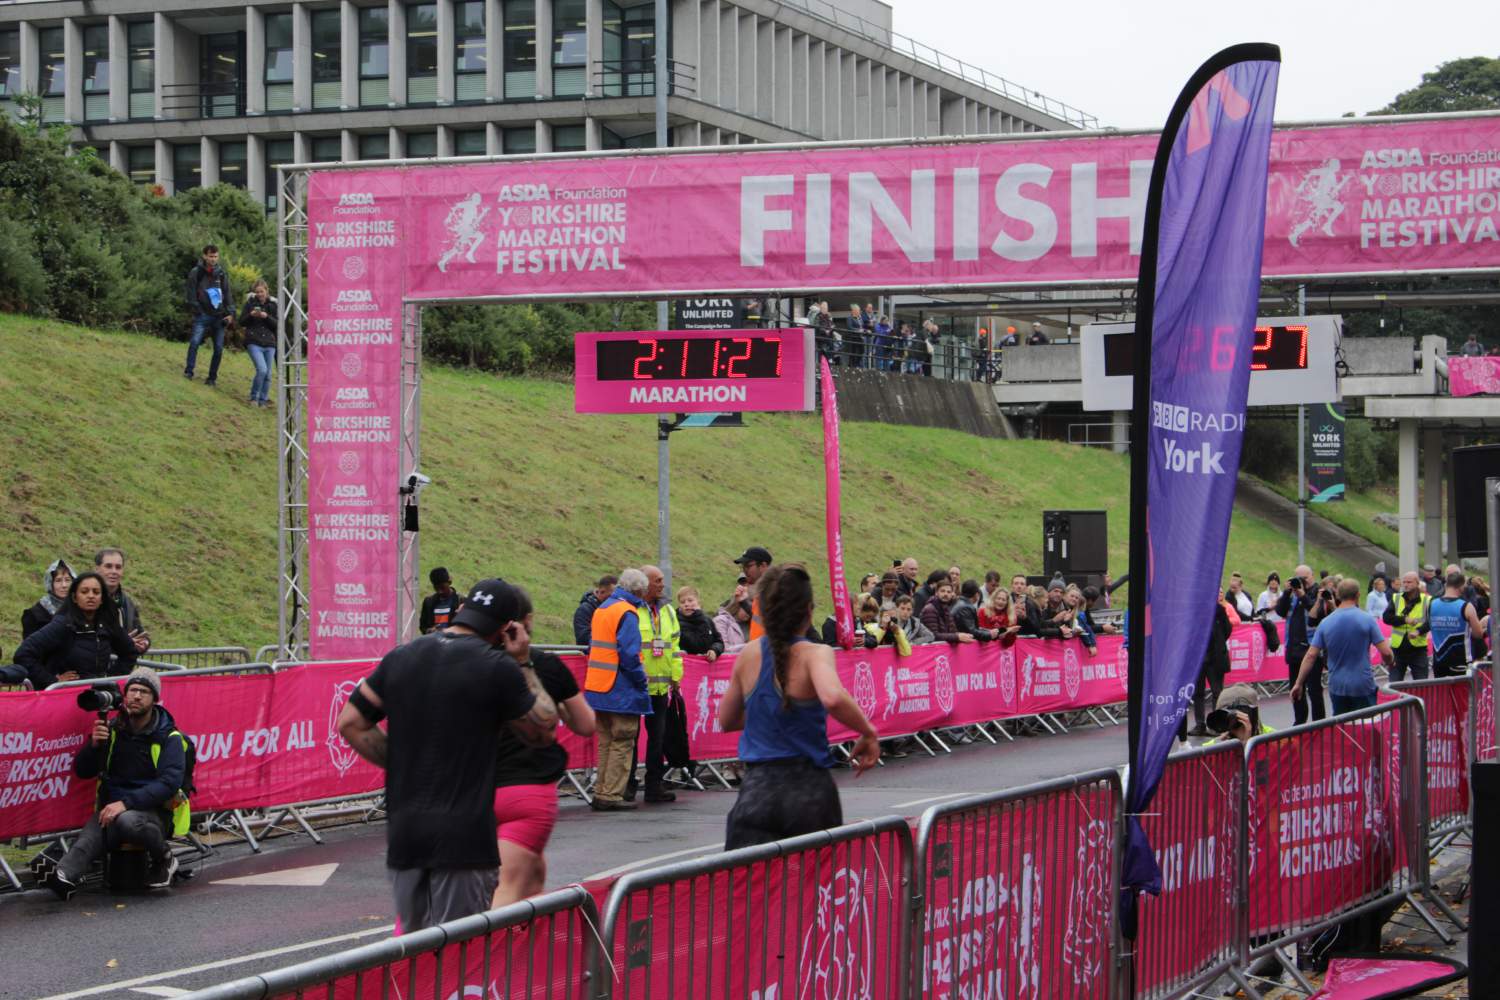 Yorkshire Marathon makes triumphant return